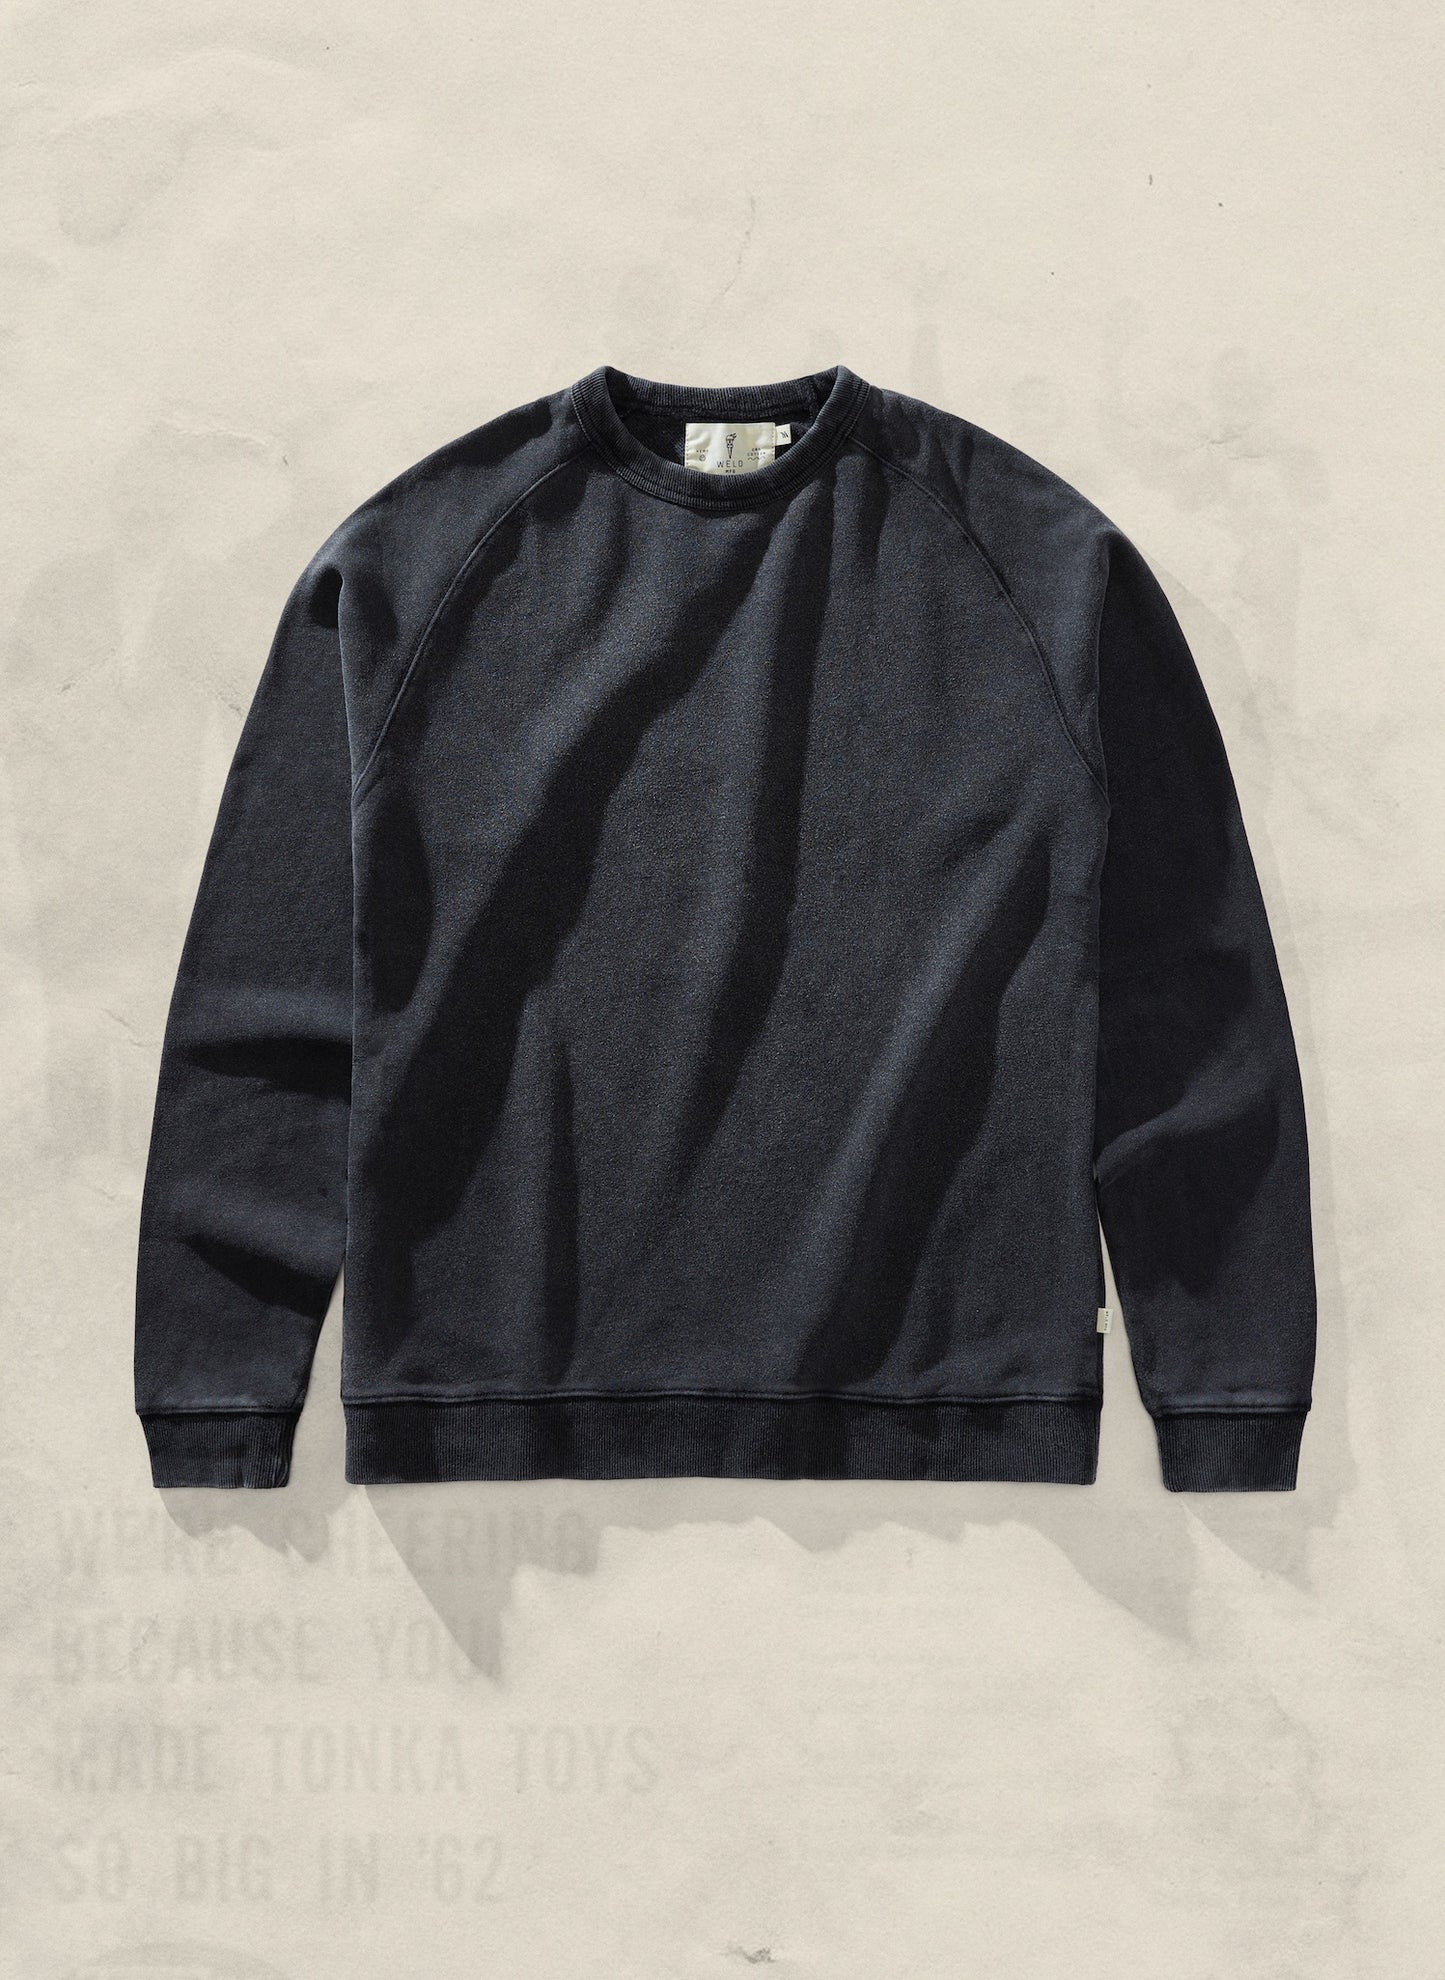 Soft Comfy Hemp Crewneck Sweatshirts with a Vintage Wash by Weld Mfg - Rust and Black Sweatshirts